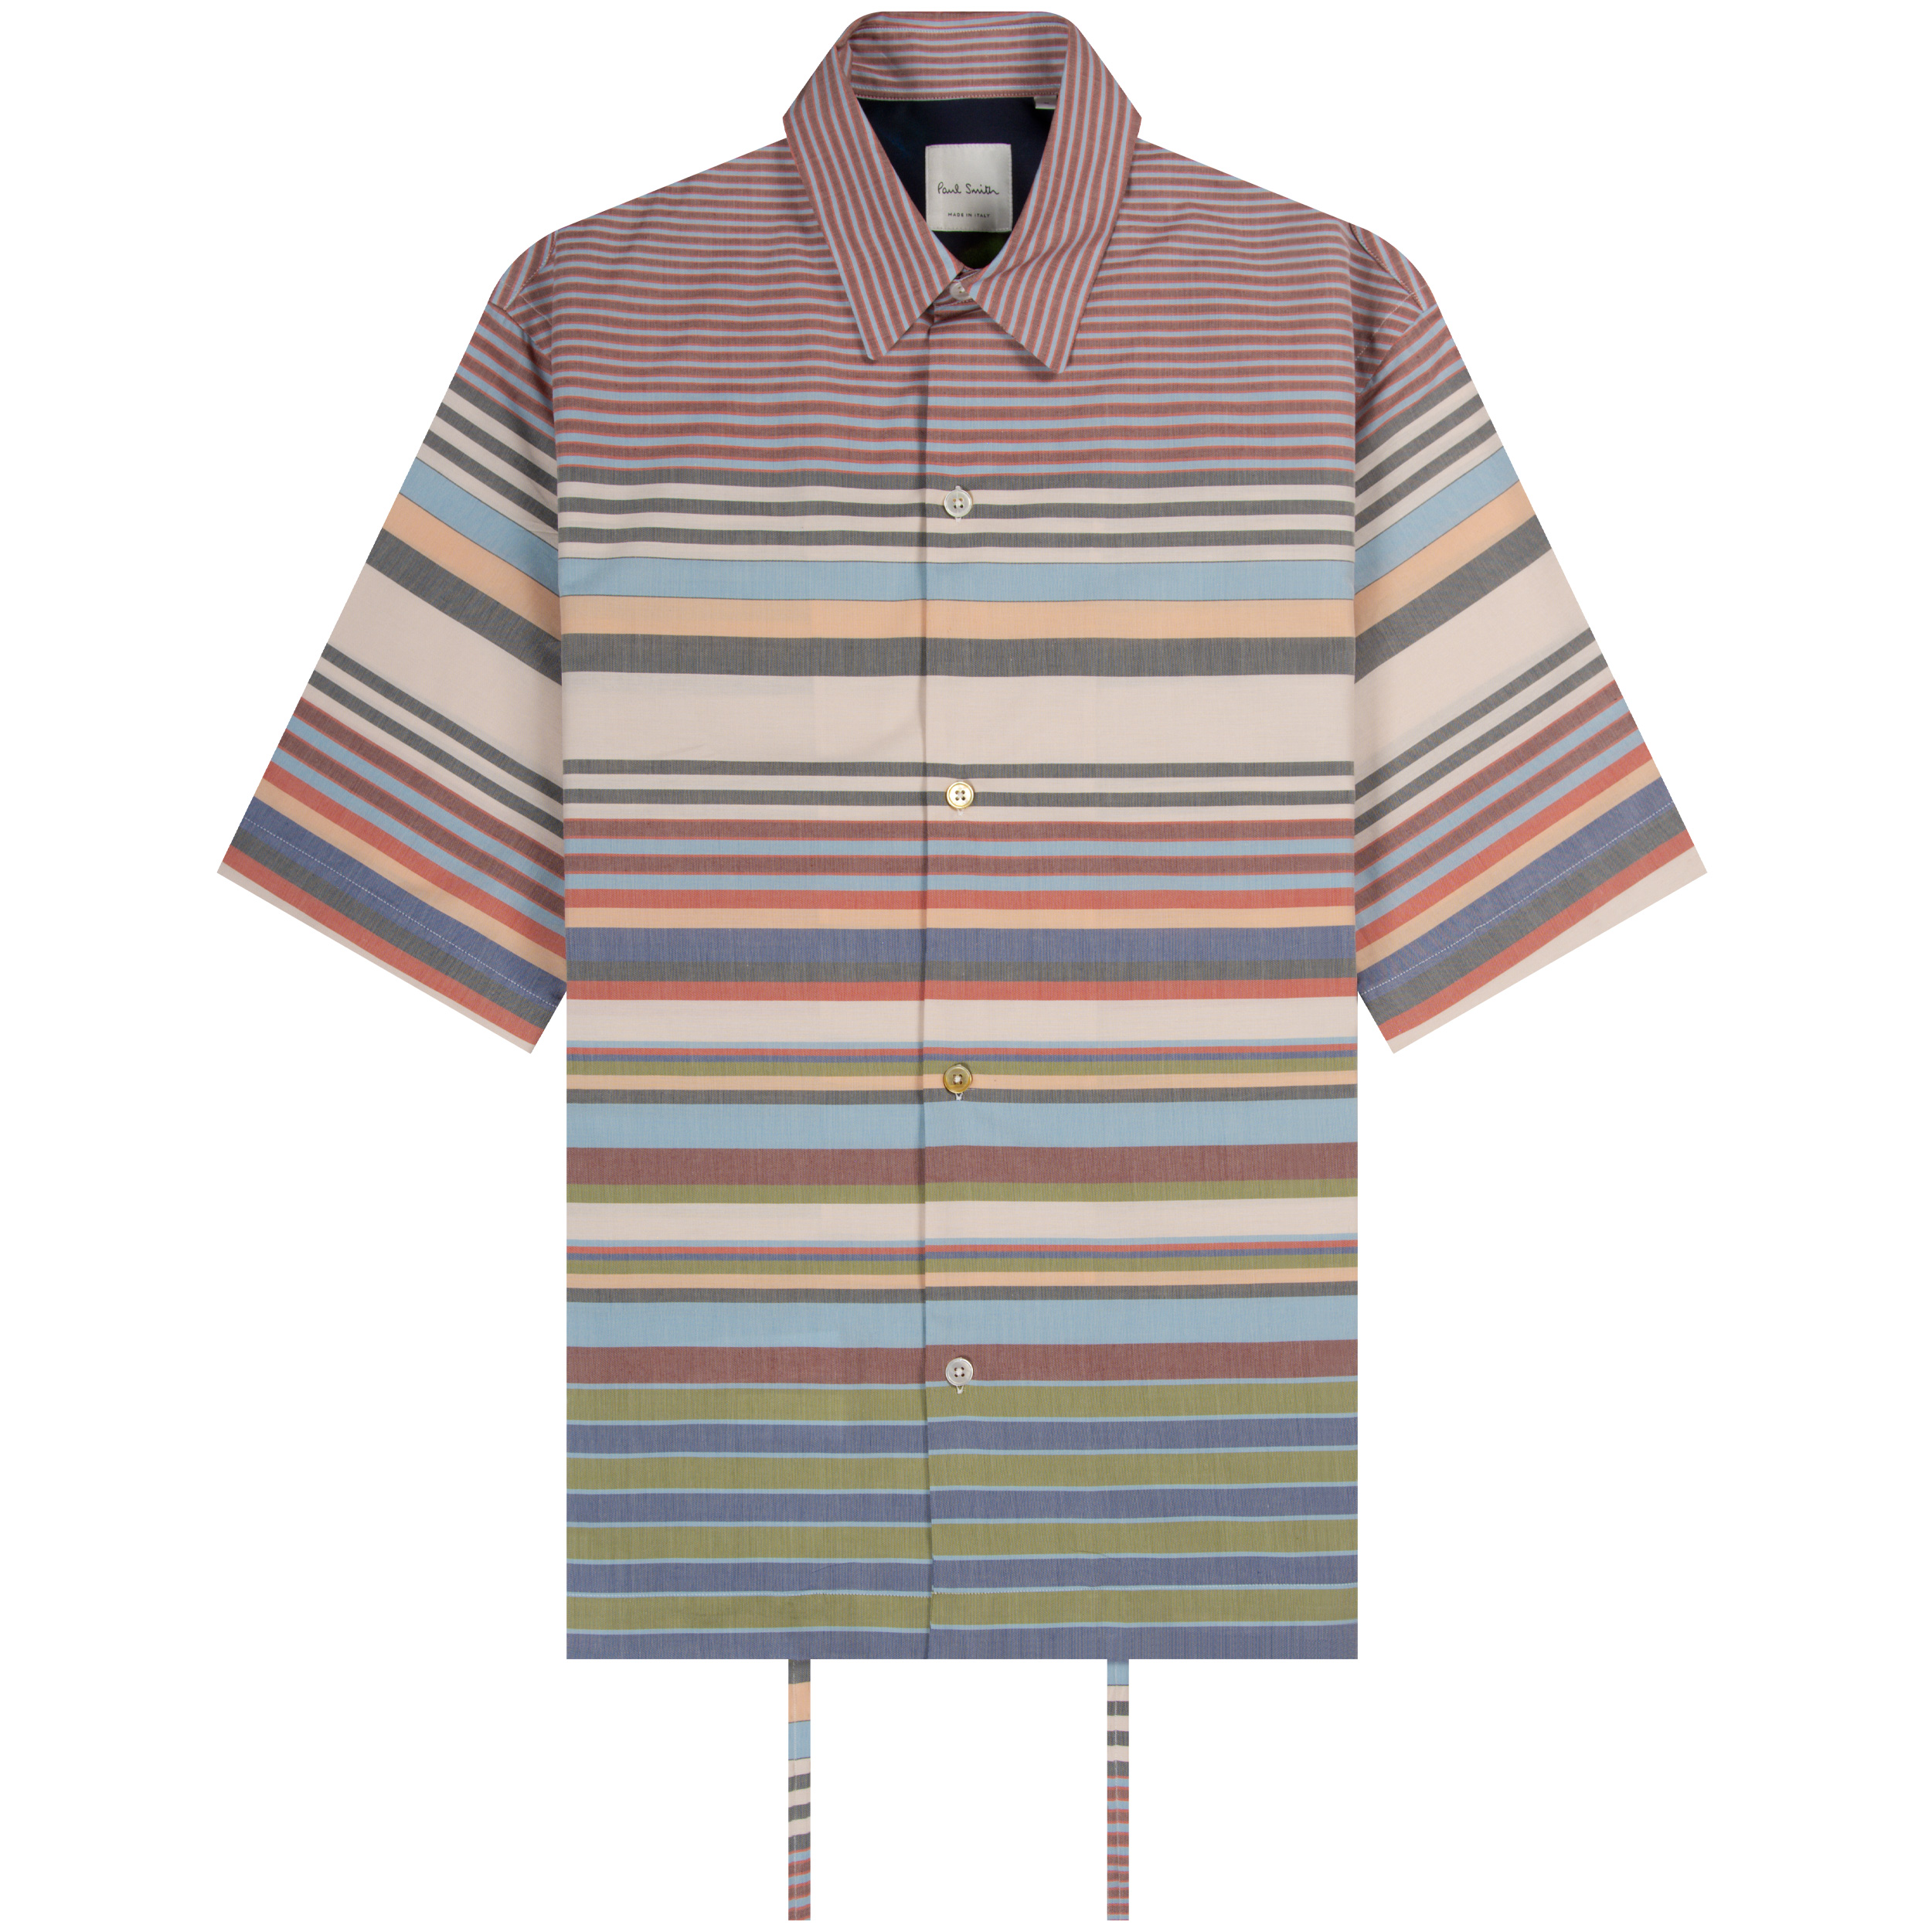 Paul Smith ’Soho Fit’ SS Stripe Shirt Salmon/Multi